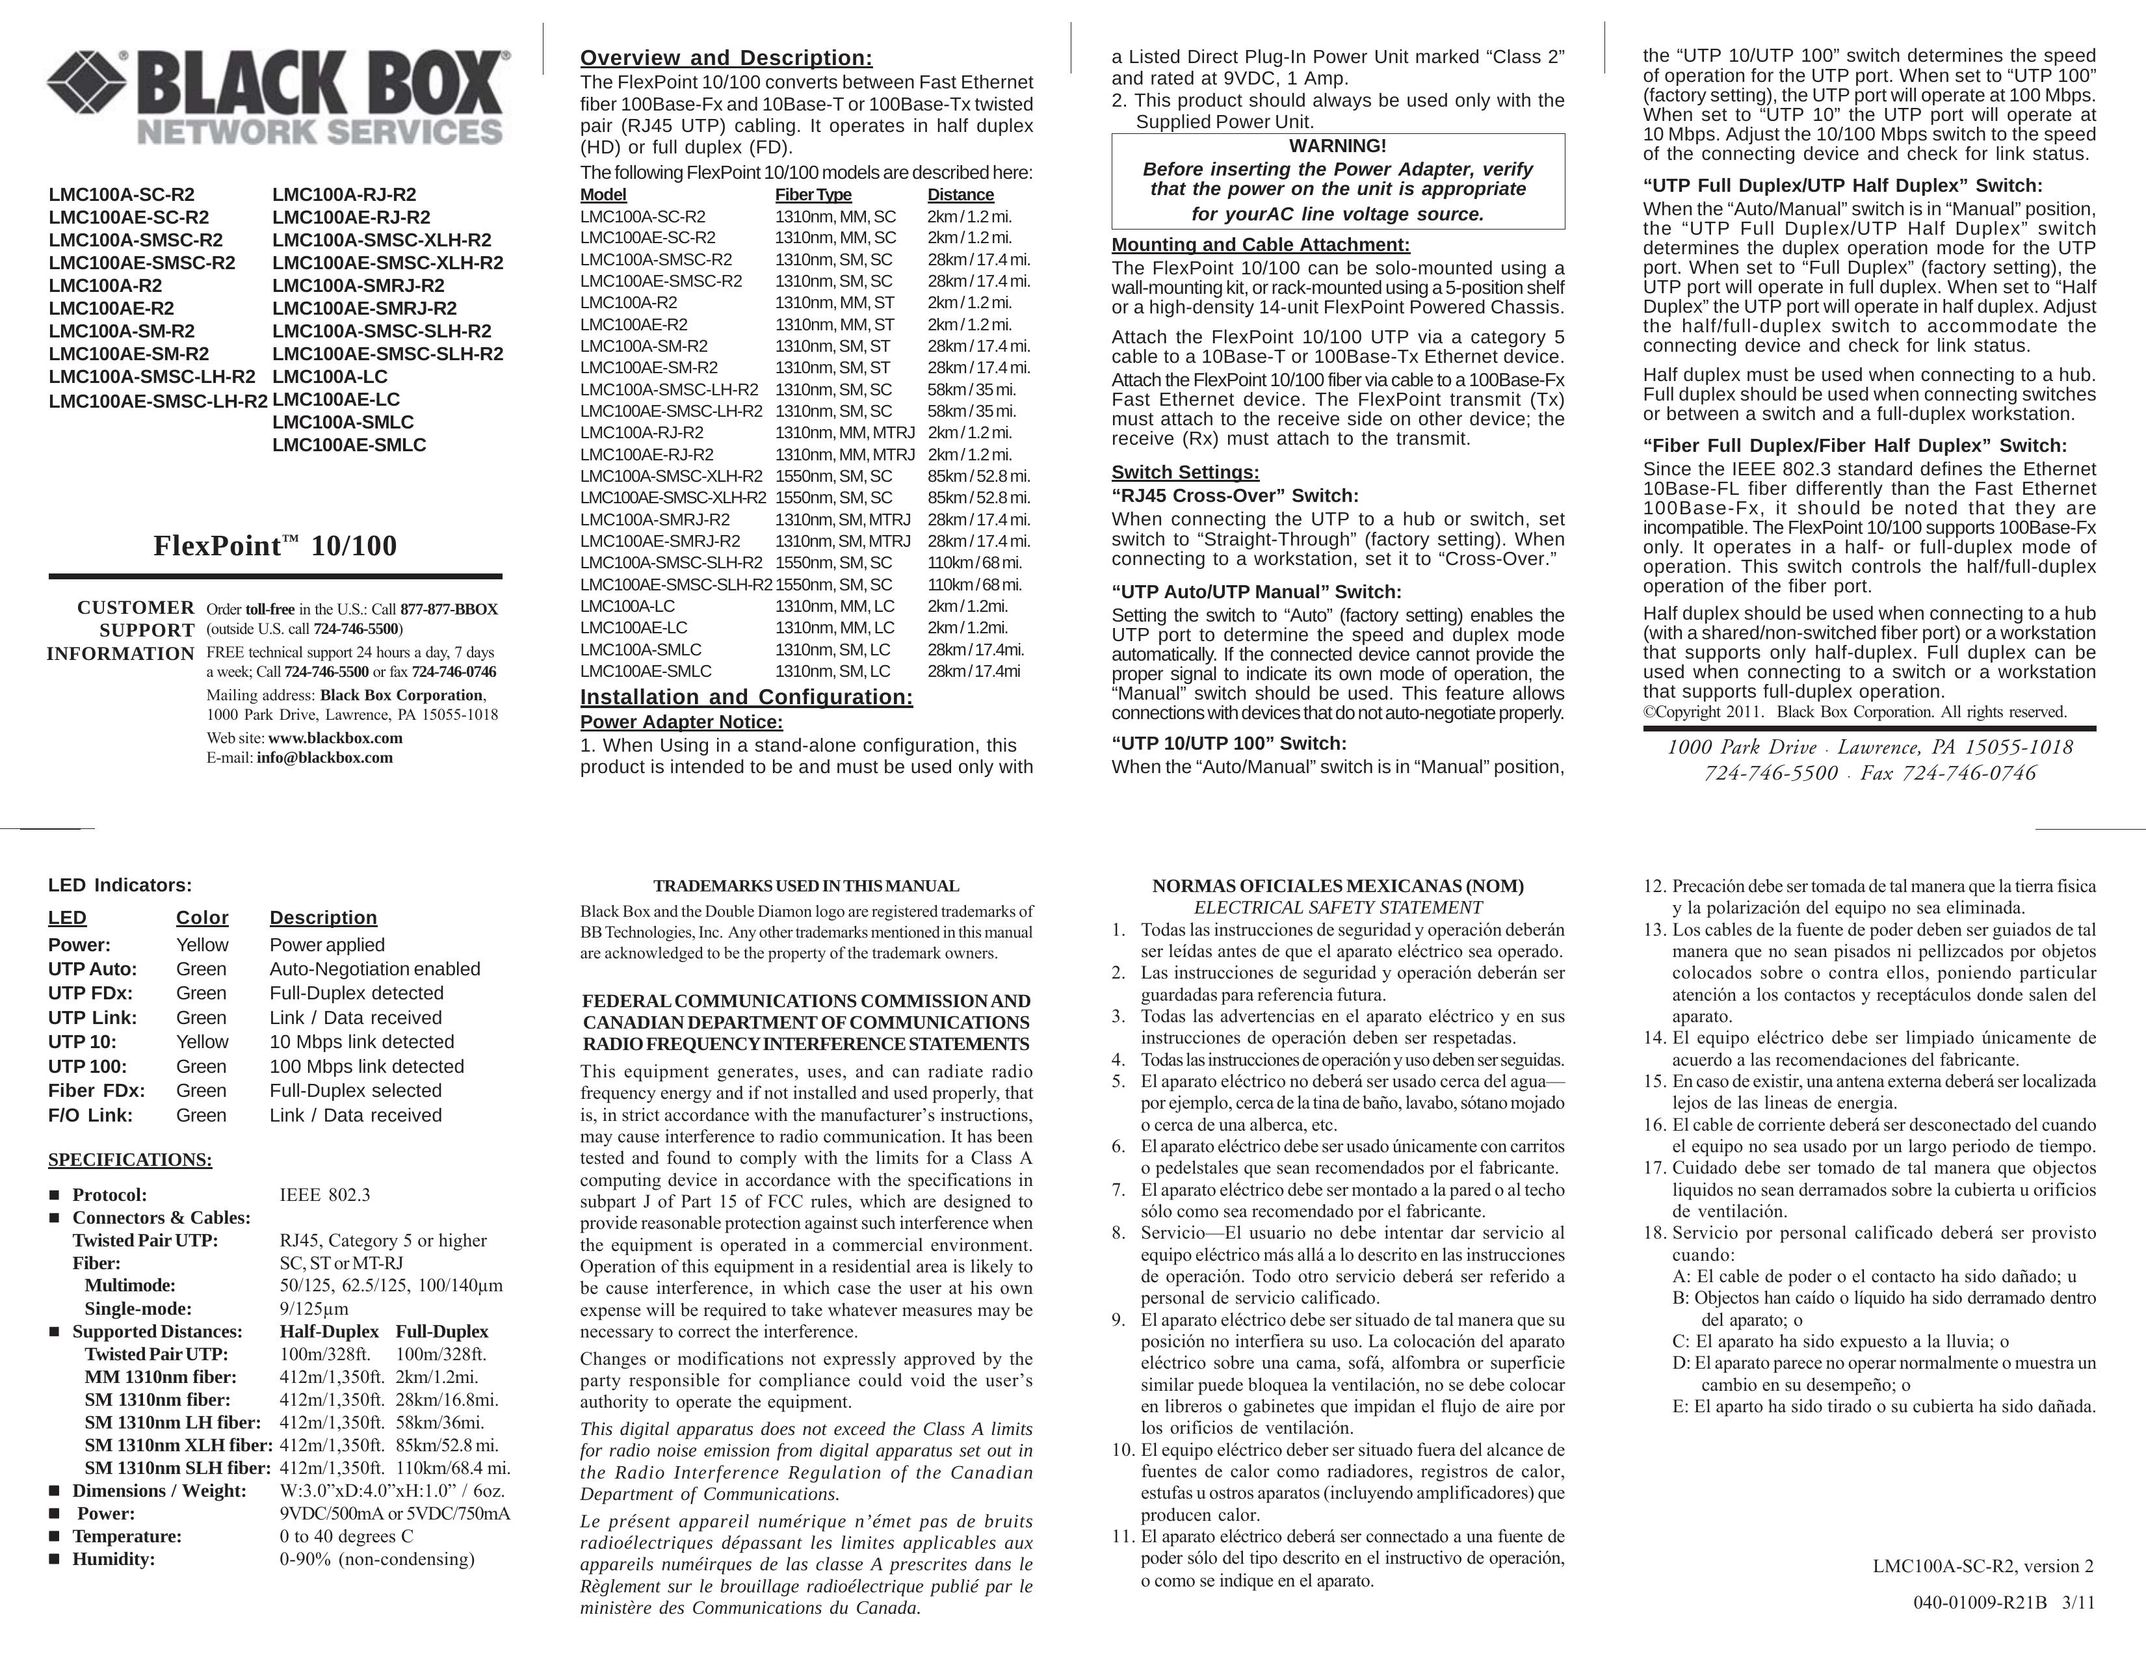 Black Box LMC100AE-SMSC-R2 Network Cables User Manual